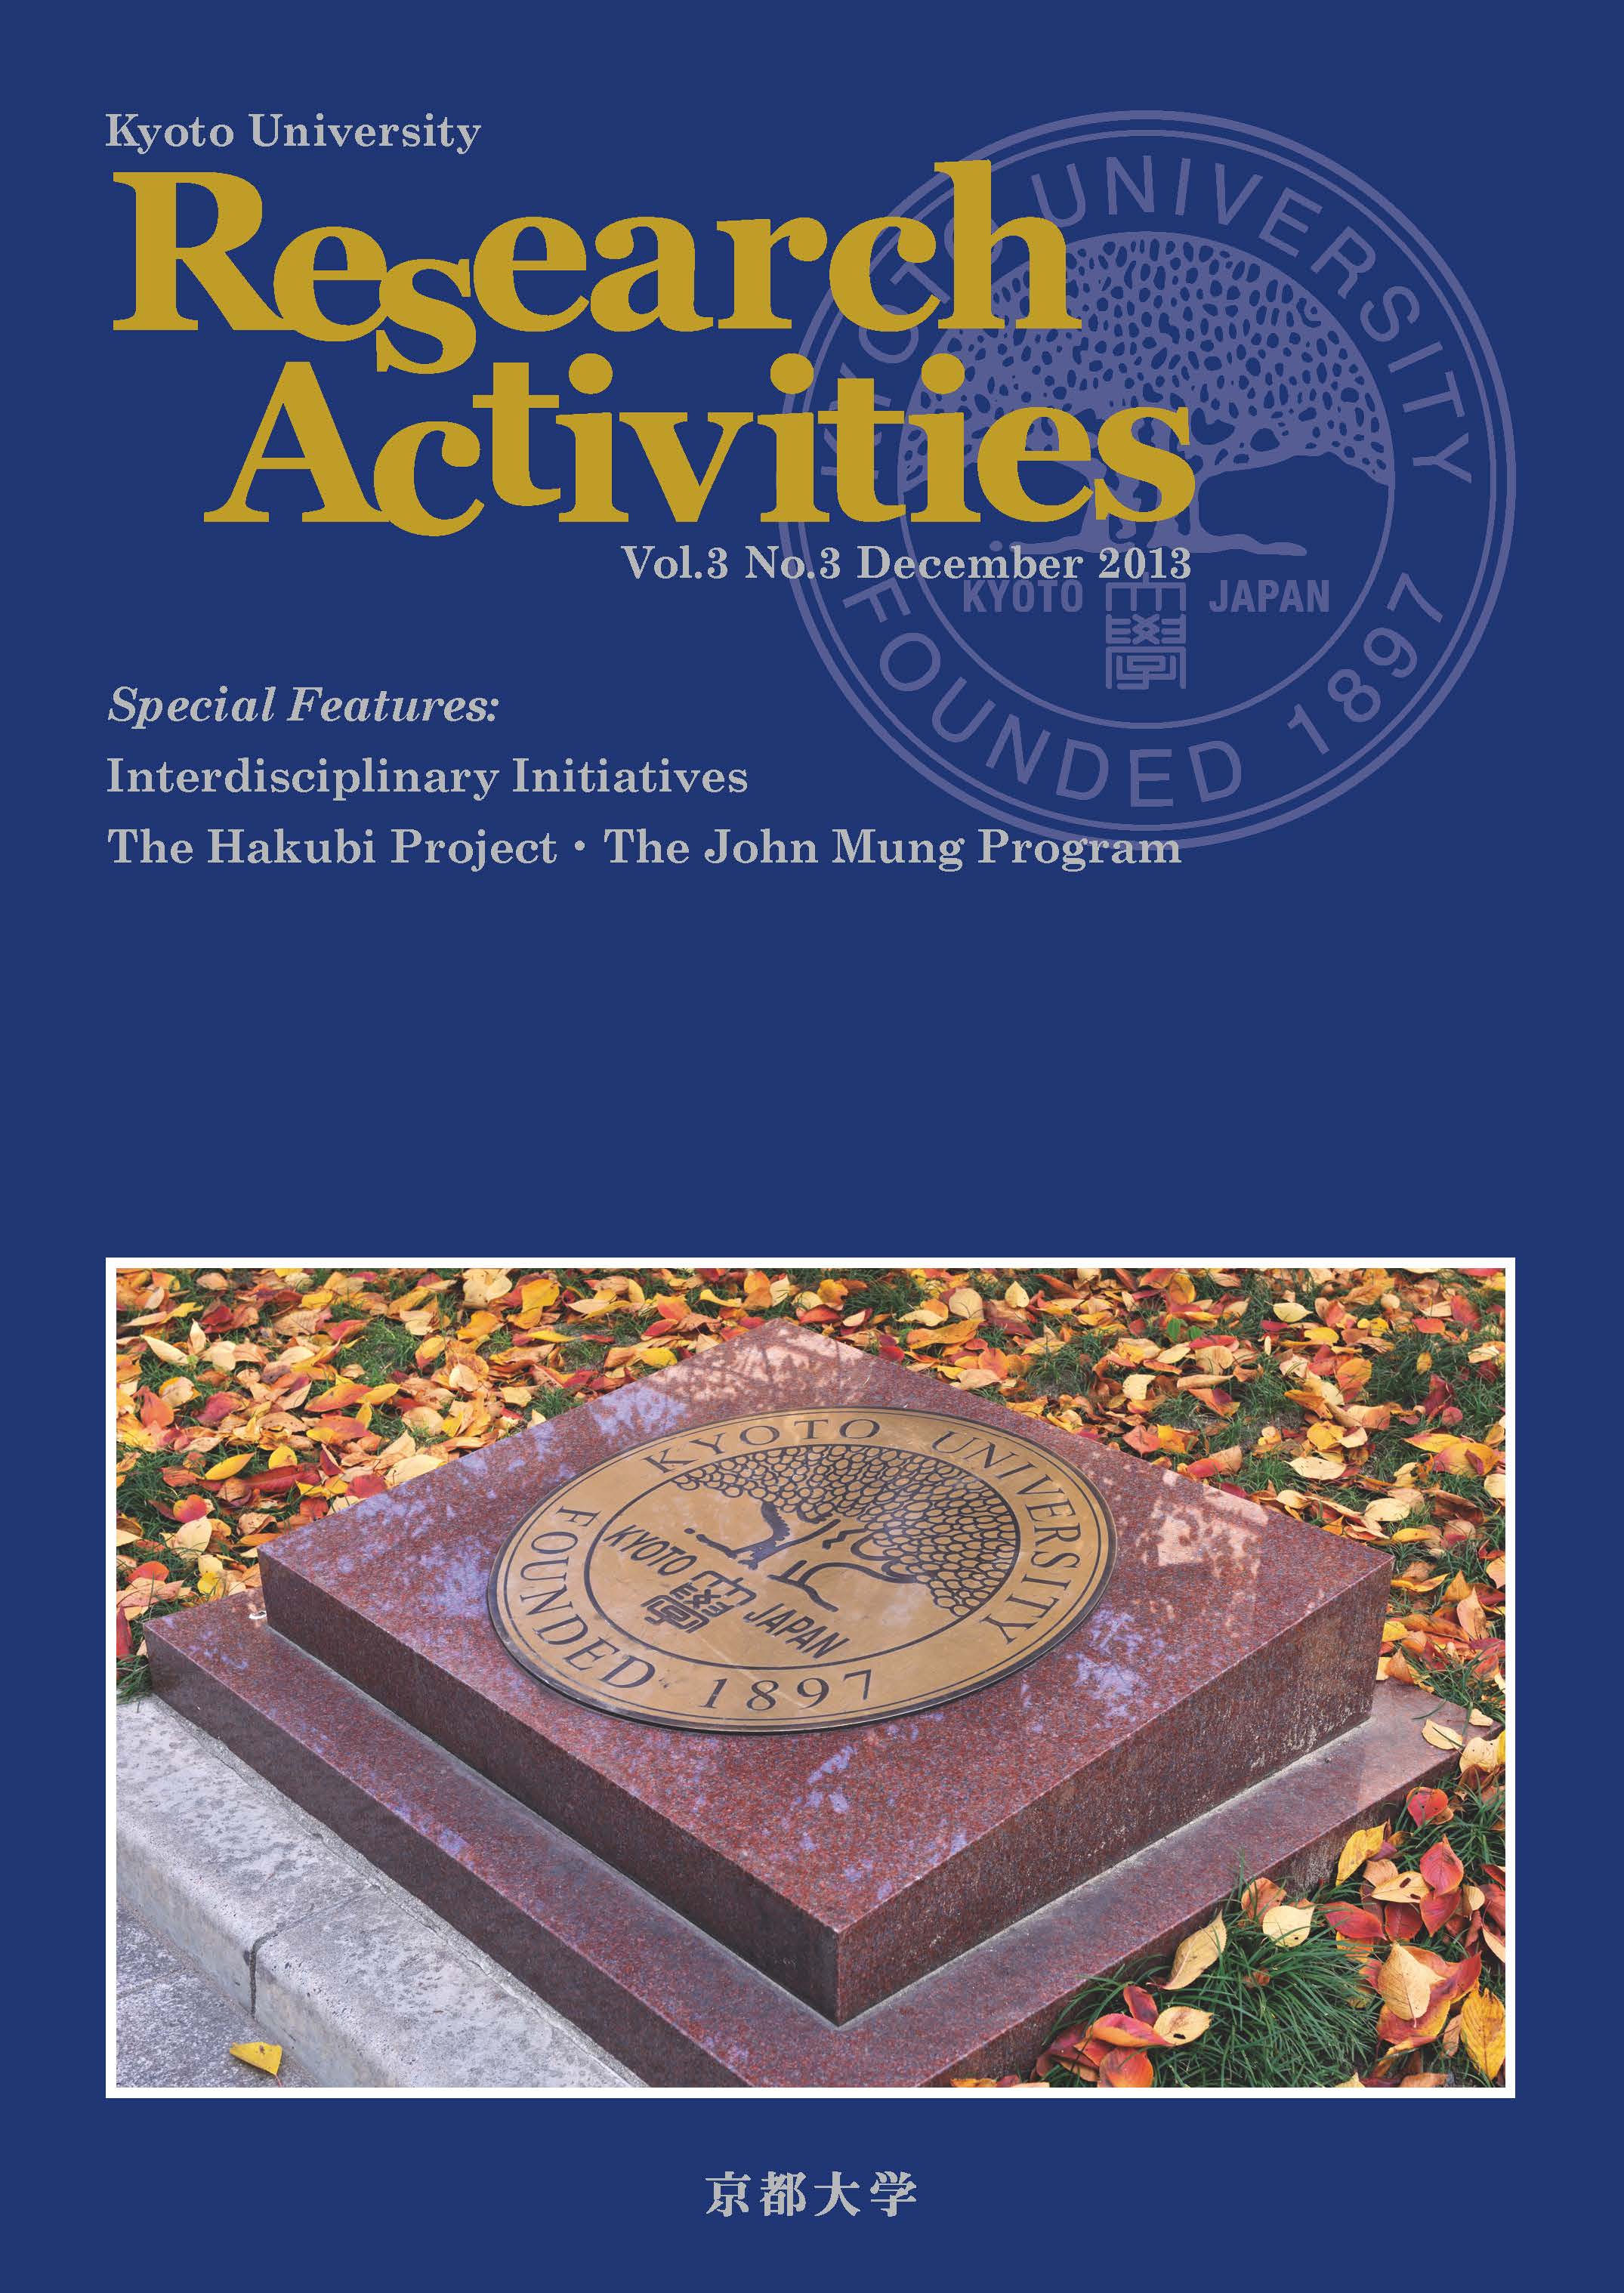 Kyoto University Research Activities Vol.3 No.3 December 2013